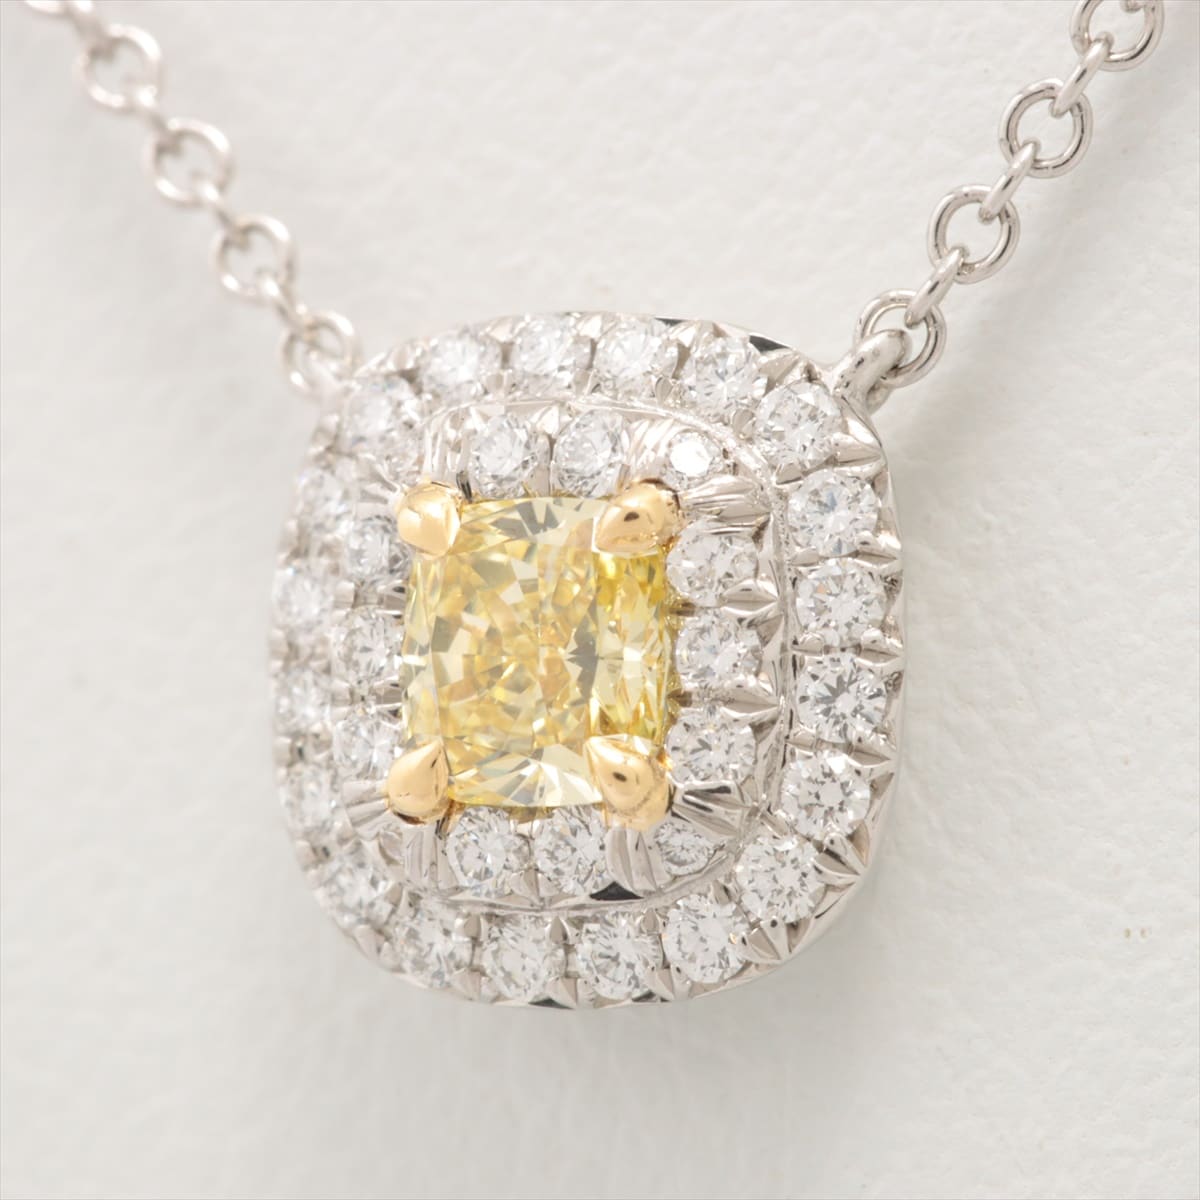 Tiffany Soleste Yellow diamond diamond Necklace 750(YG)×Pt950 3.6g 0.29 FANCY INTENSE YELLOW IF Cushion NONE